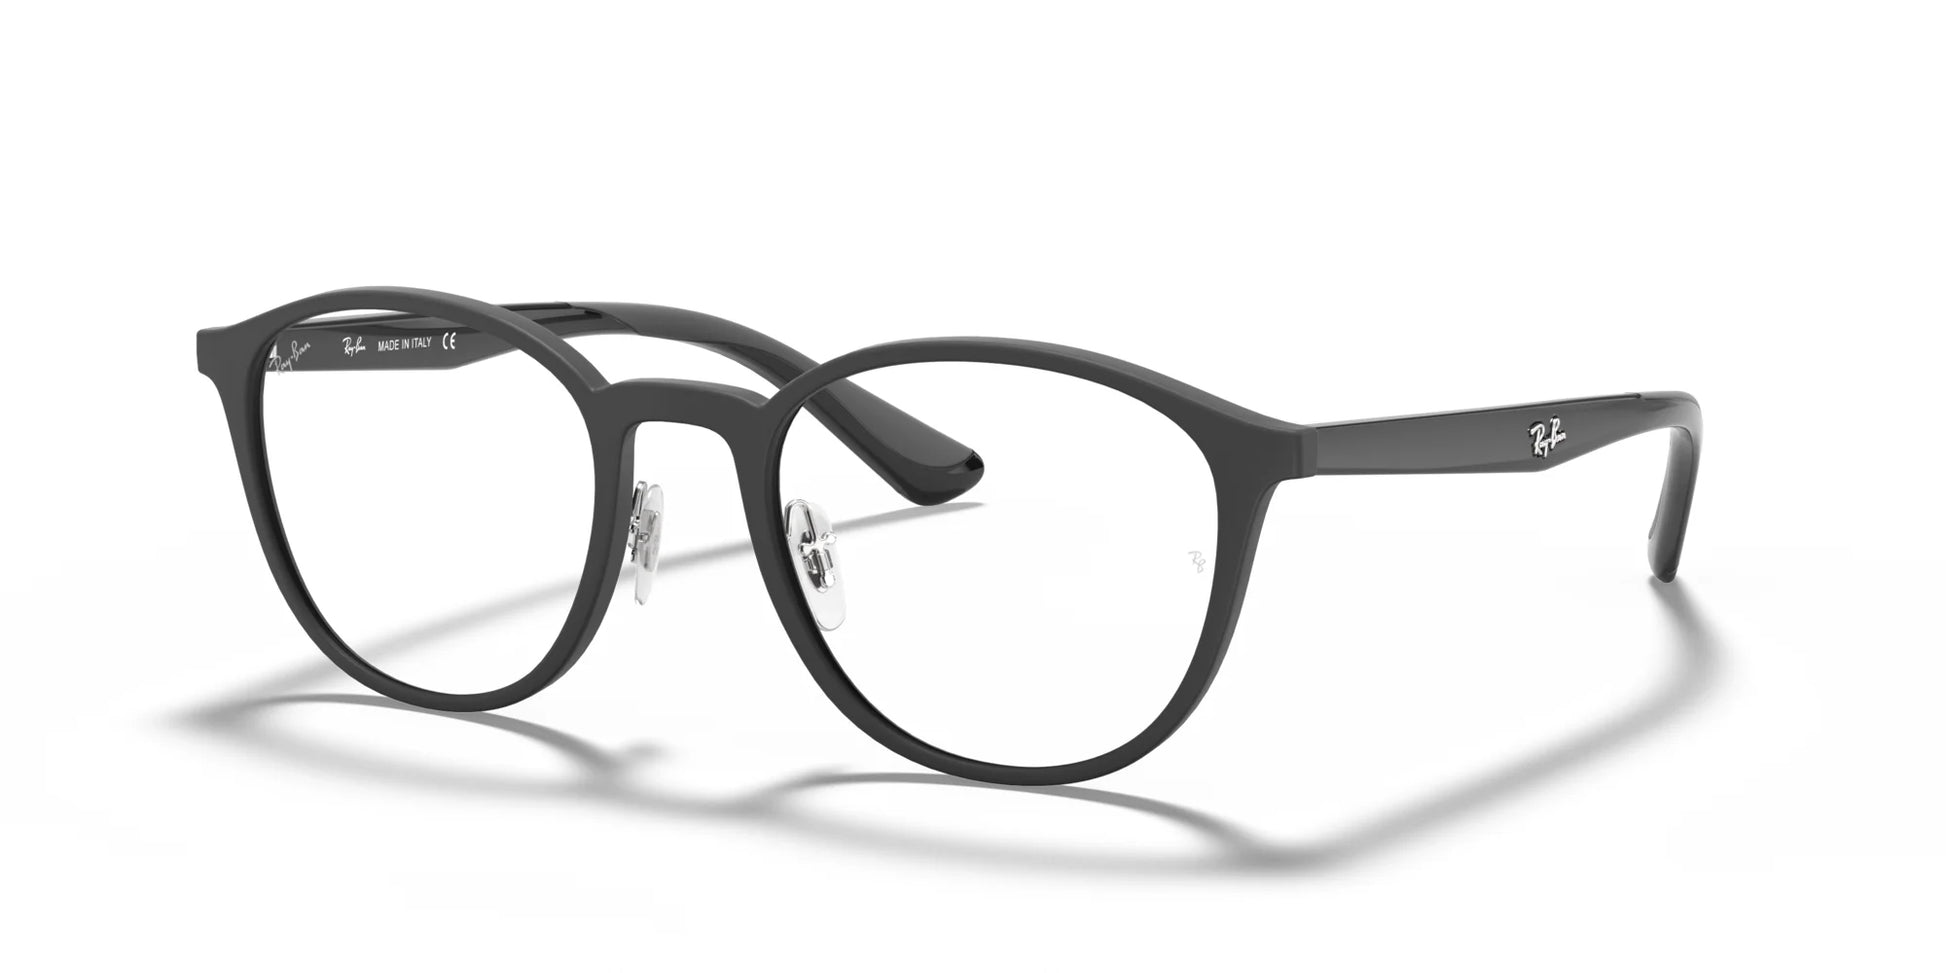 Ray-Ban RX7156 Eyeglasses Black / Nylon